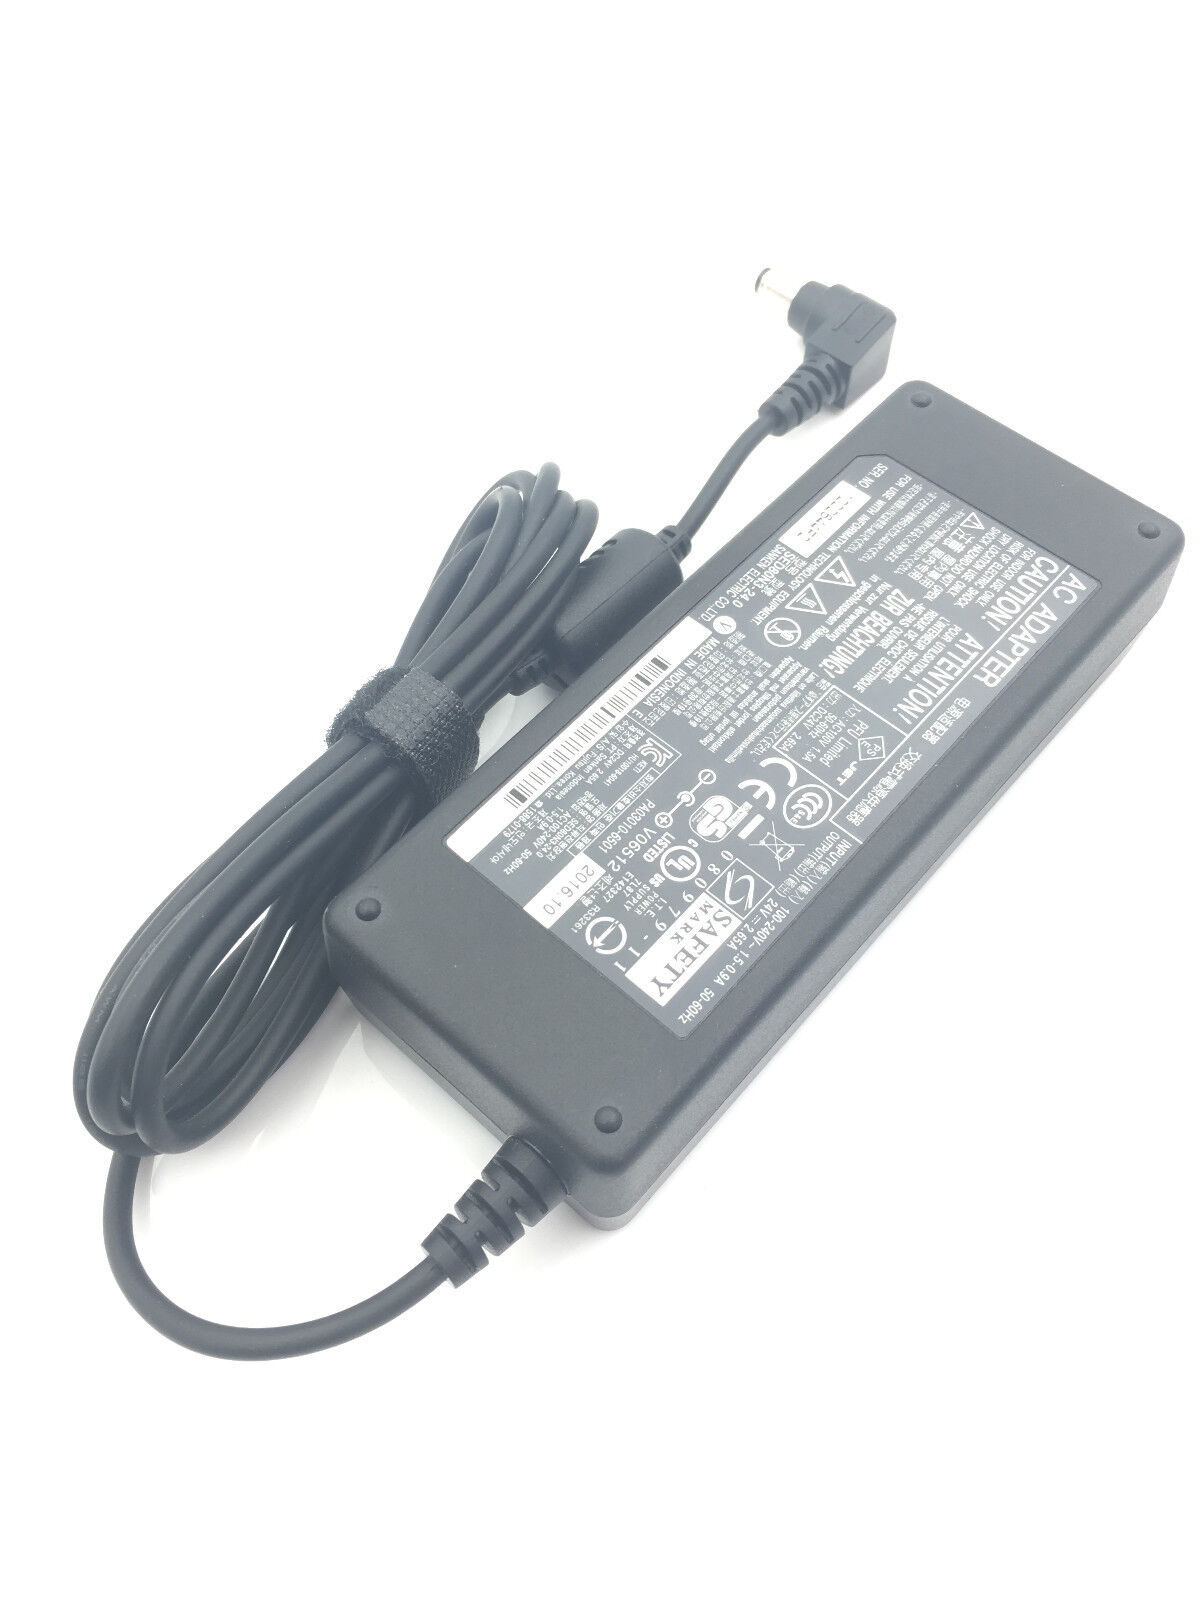 OEM QUALITY AC Power Adapter for Fujitsu fi-7160 fi-7180 fi-7260 PA03670-K905 Compatible Brand: For Fujitsu QTY: 1P